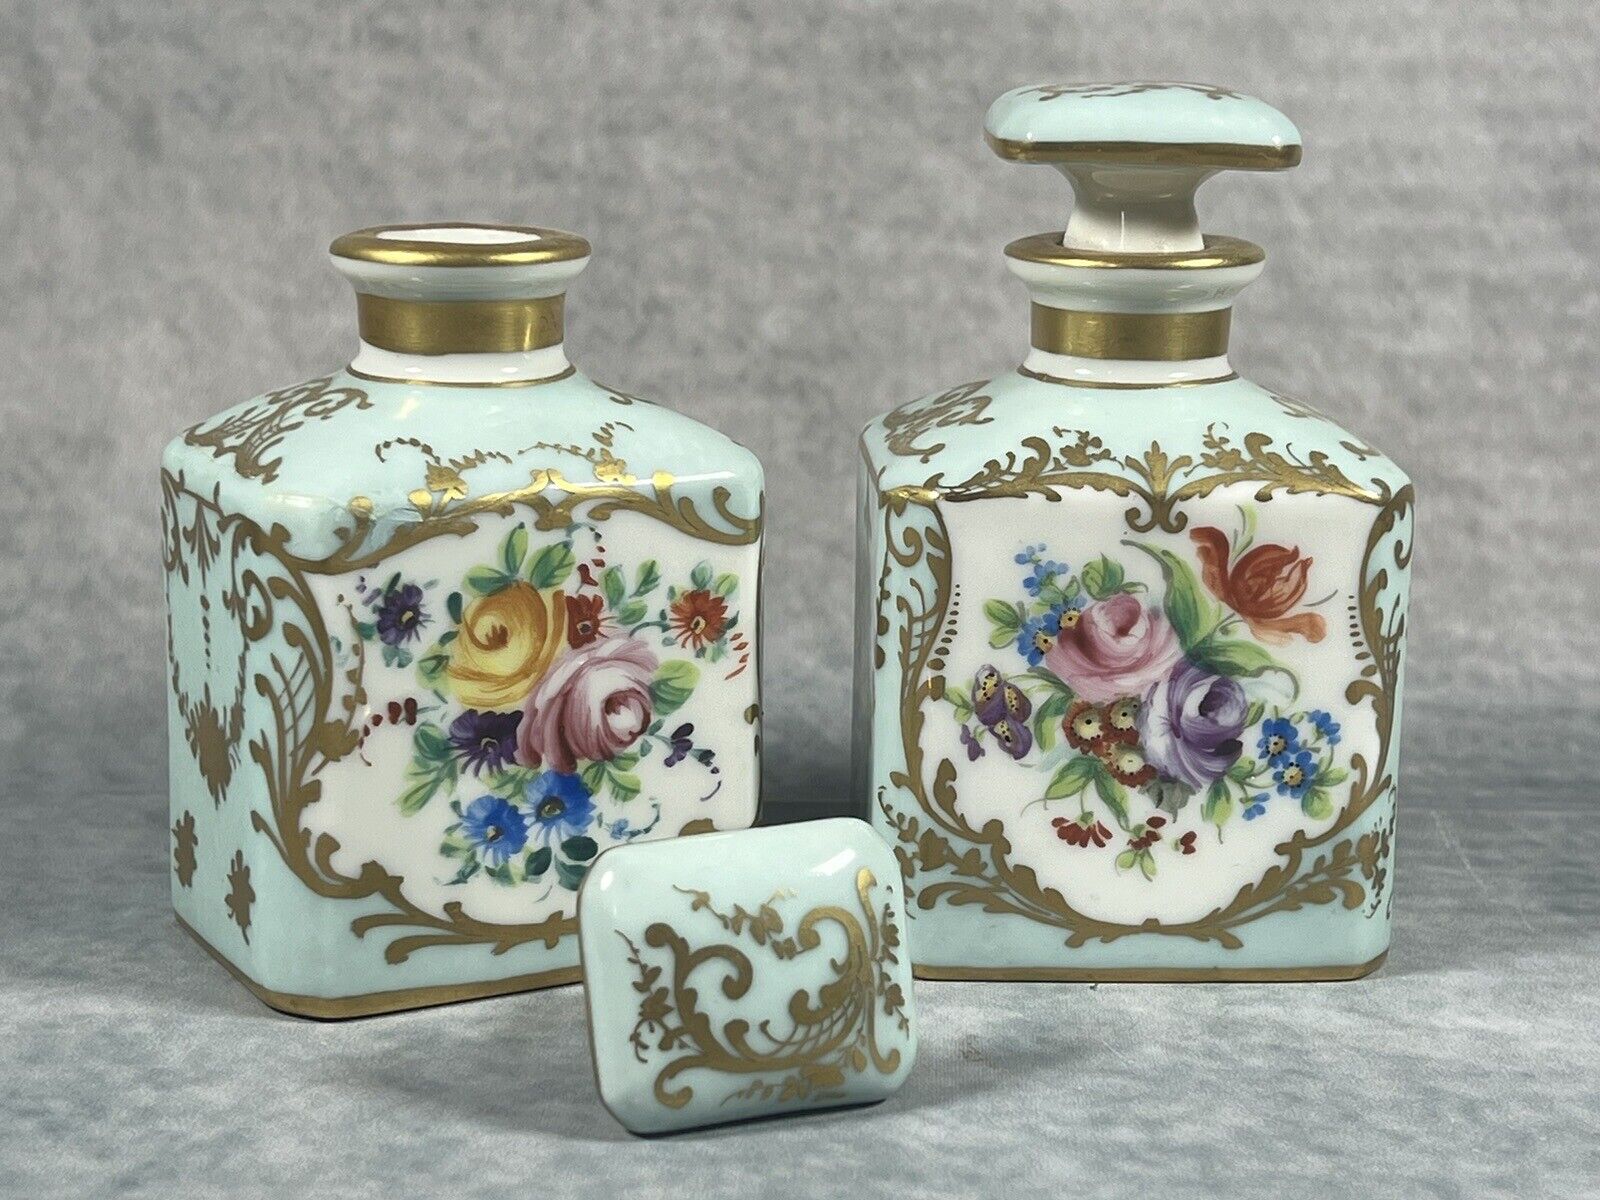 Superb Le Tallec Paris Porcelain Matching Pair of Perfume Bottles - One A/F